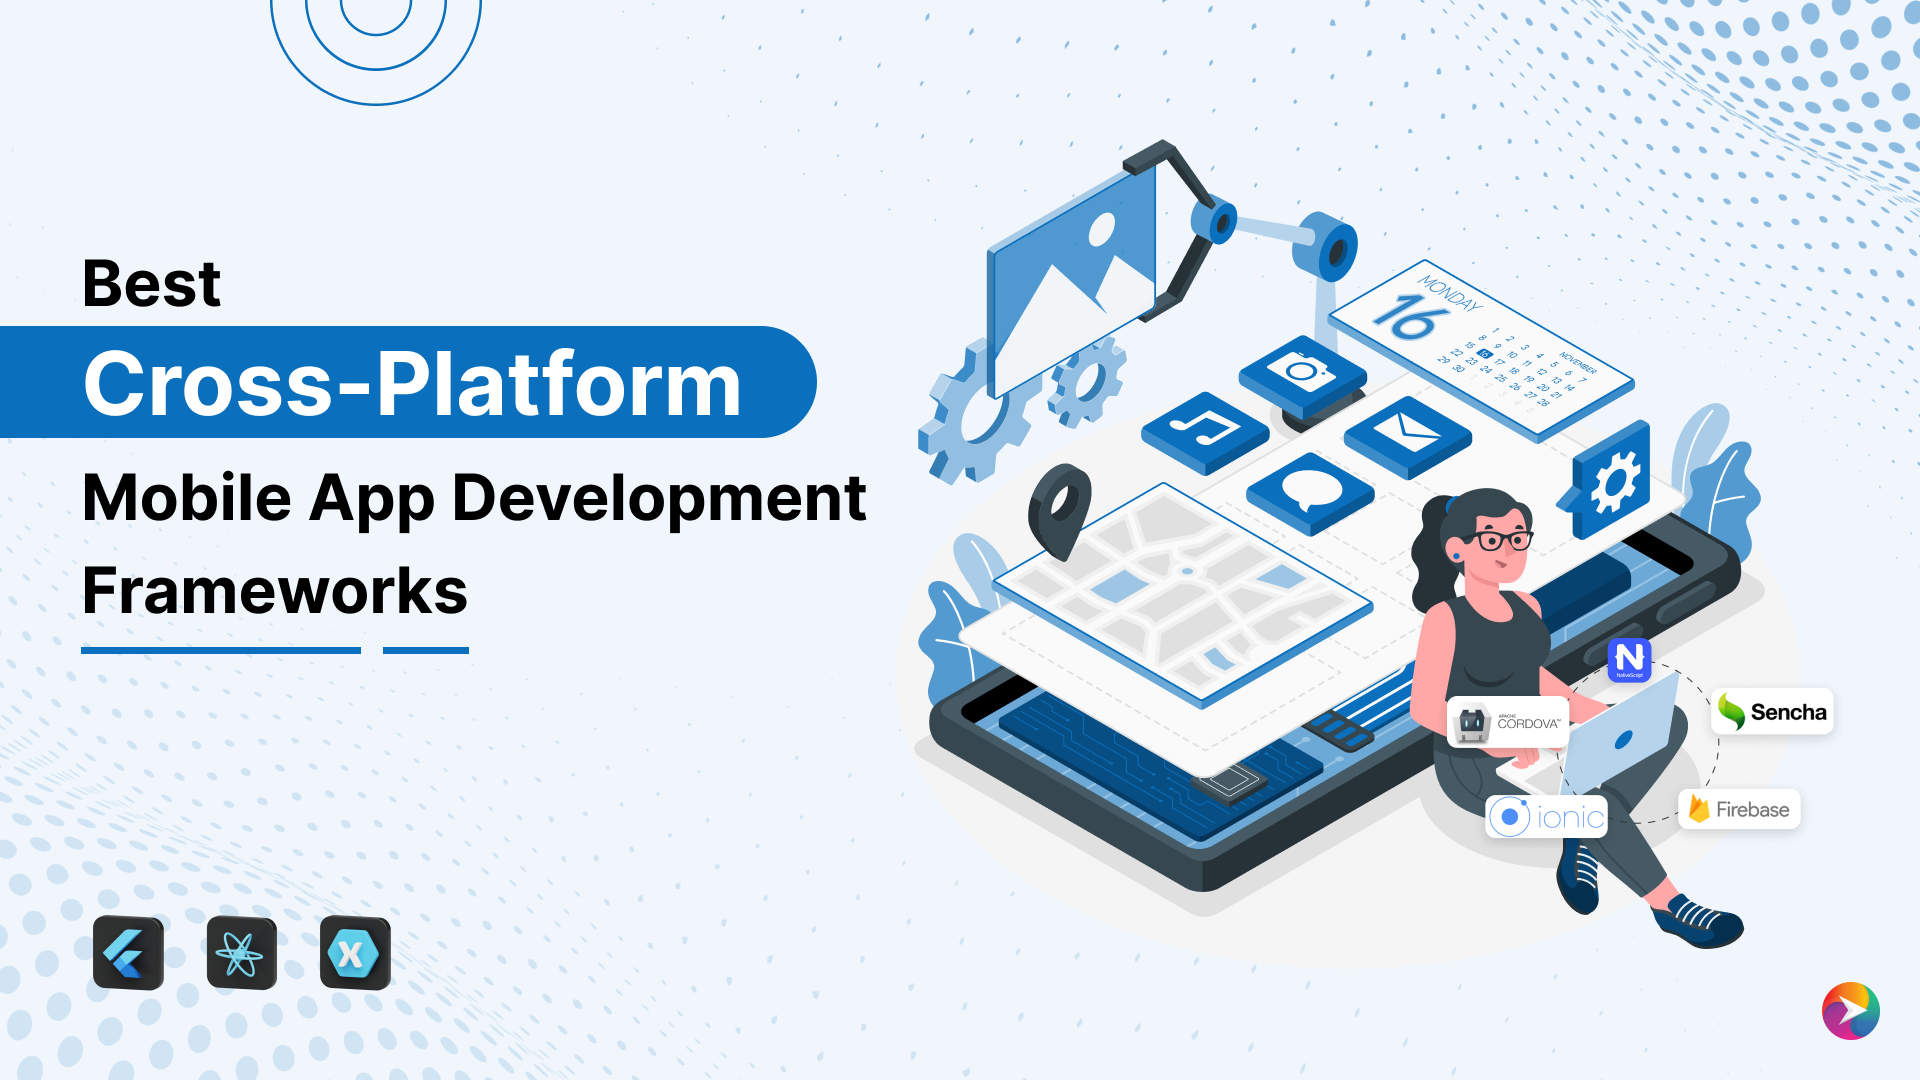 Best Cross-Platform Mobile App Development Frameworks